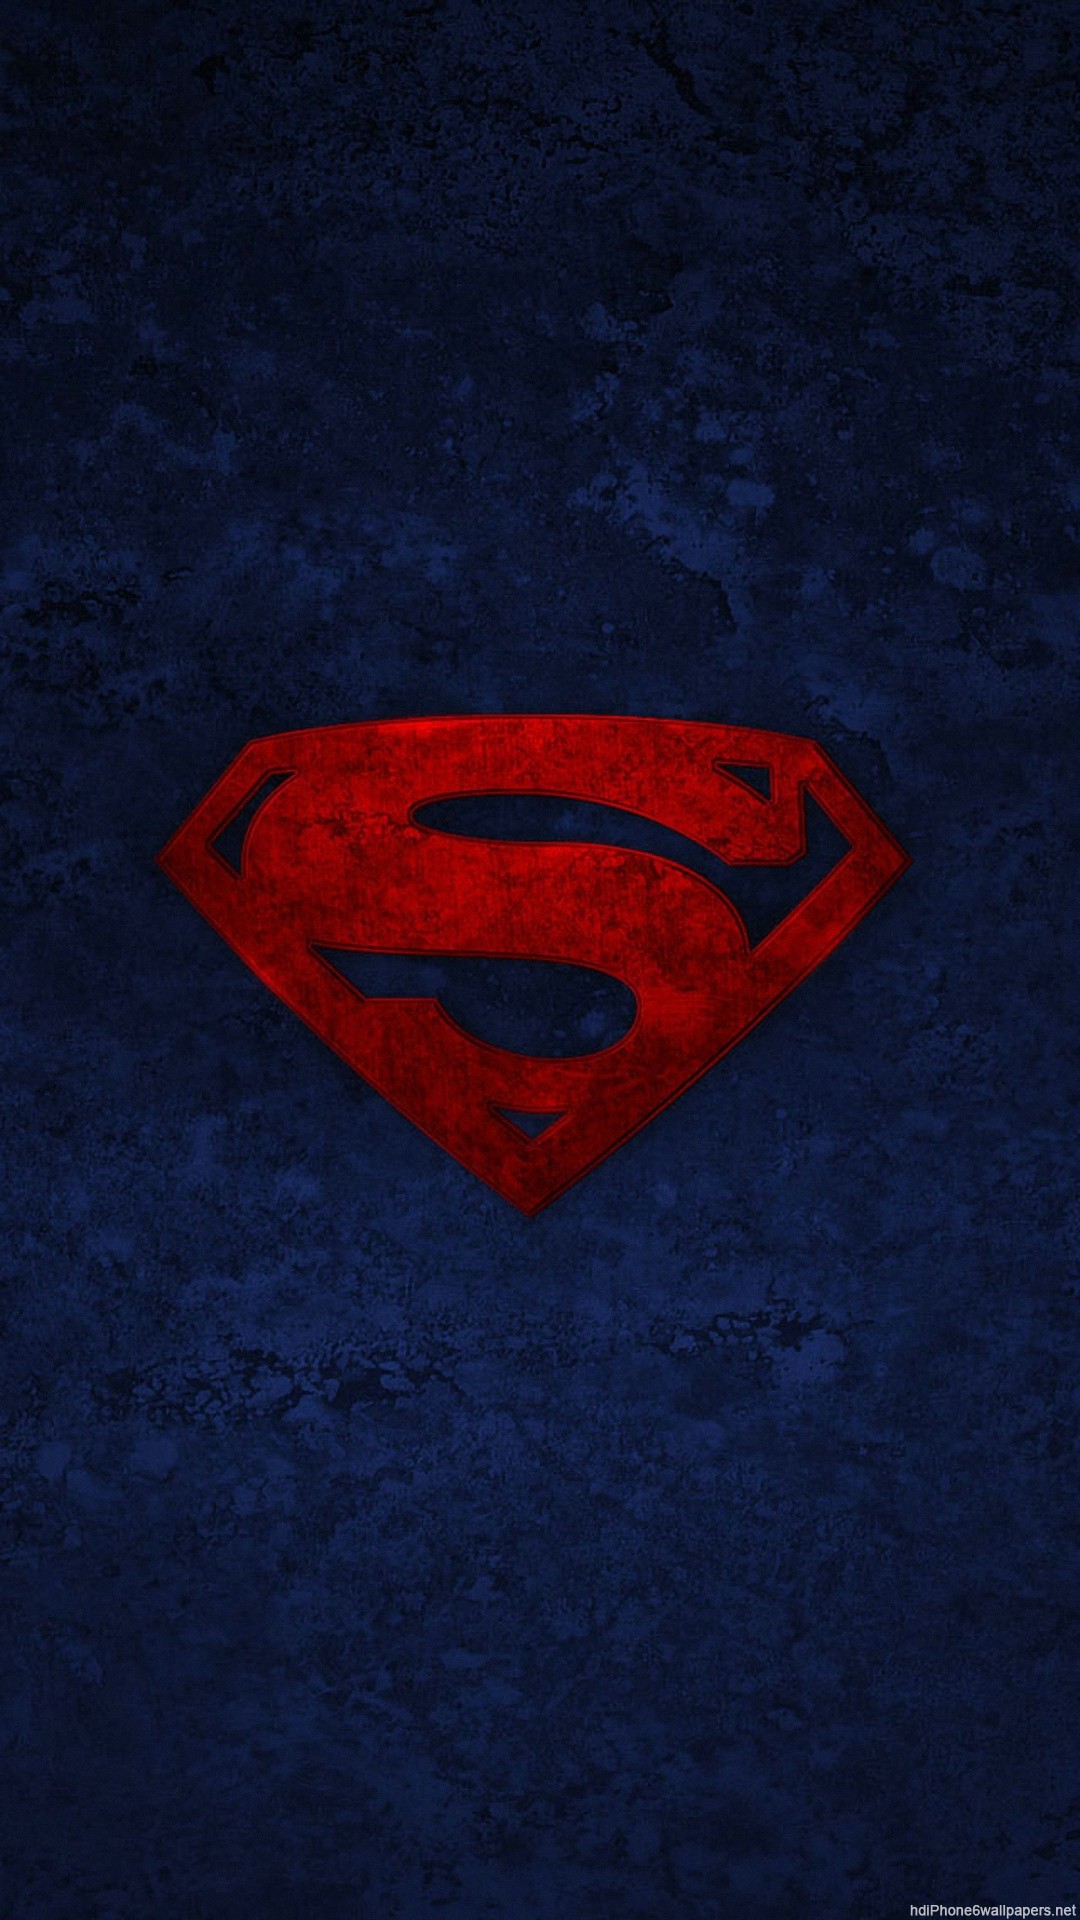 1080x1920 HD Superman logo iphone 6 wallpaper